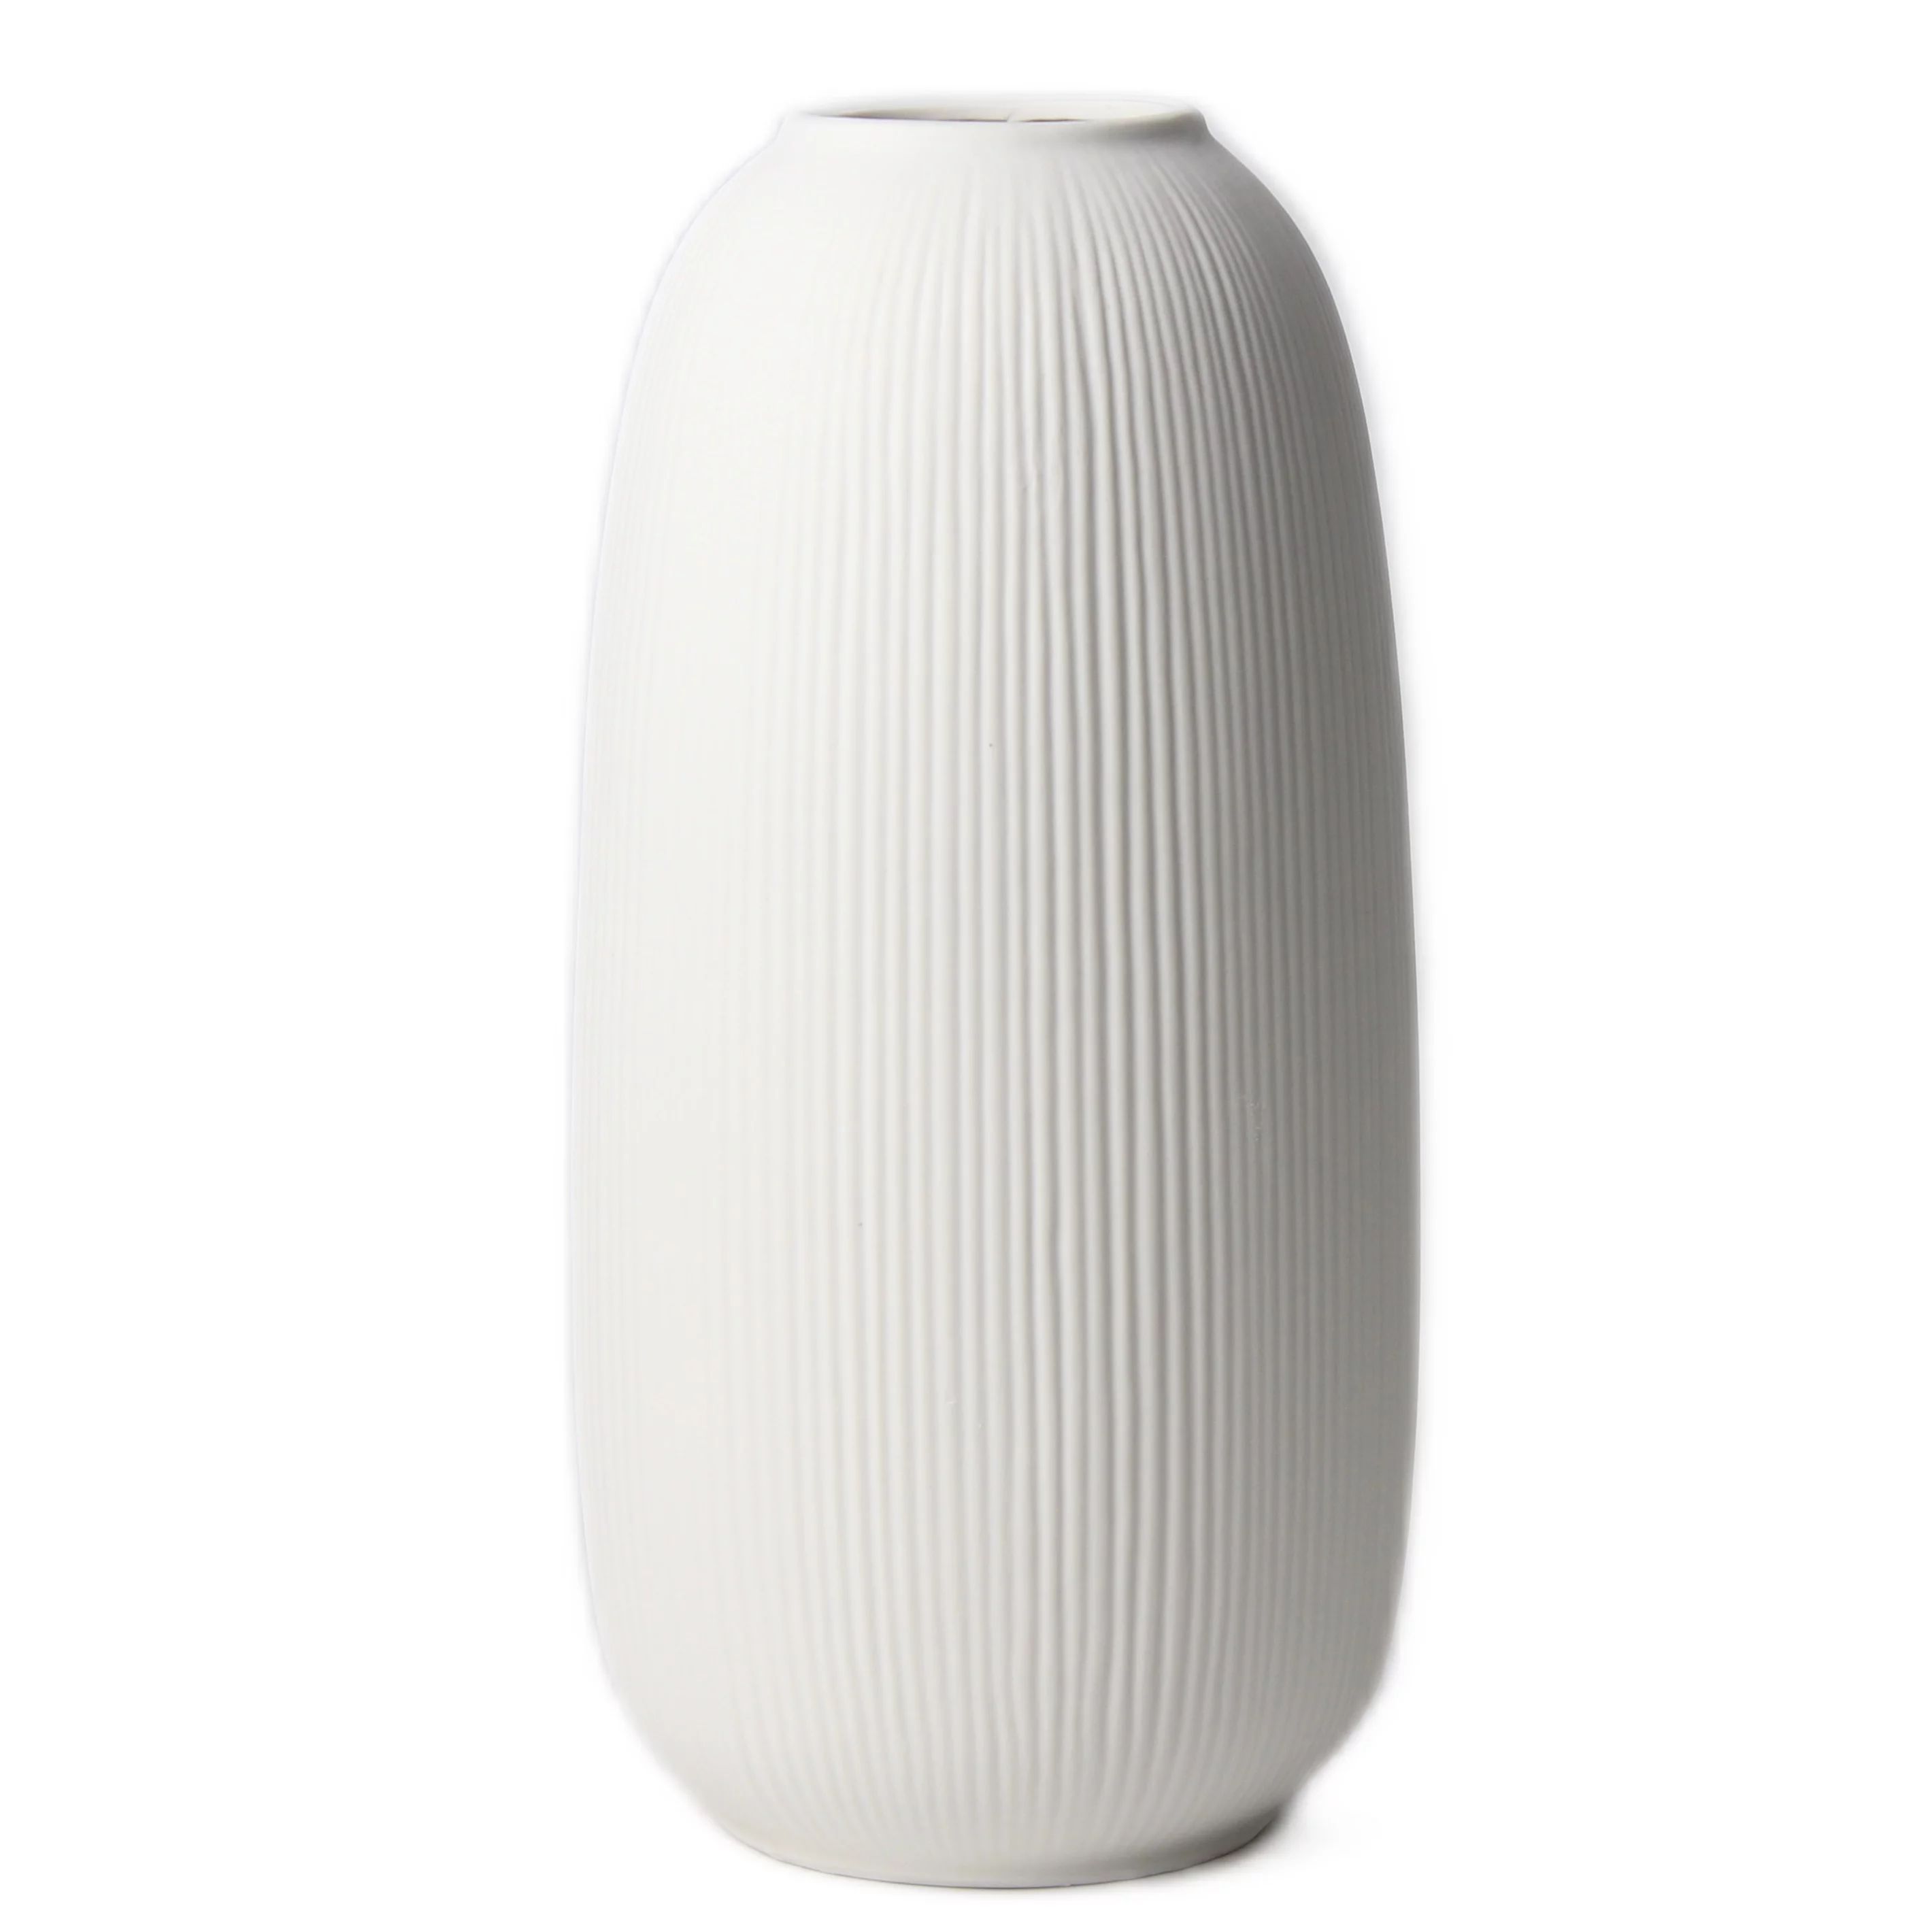 Portsea Lines Clay Vase in White - Toughened Ceramic Vase - 10 Inch Flower Vase | Walmart (US)